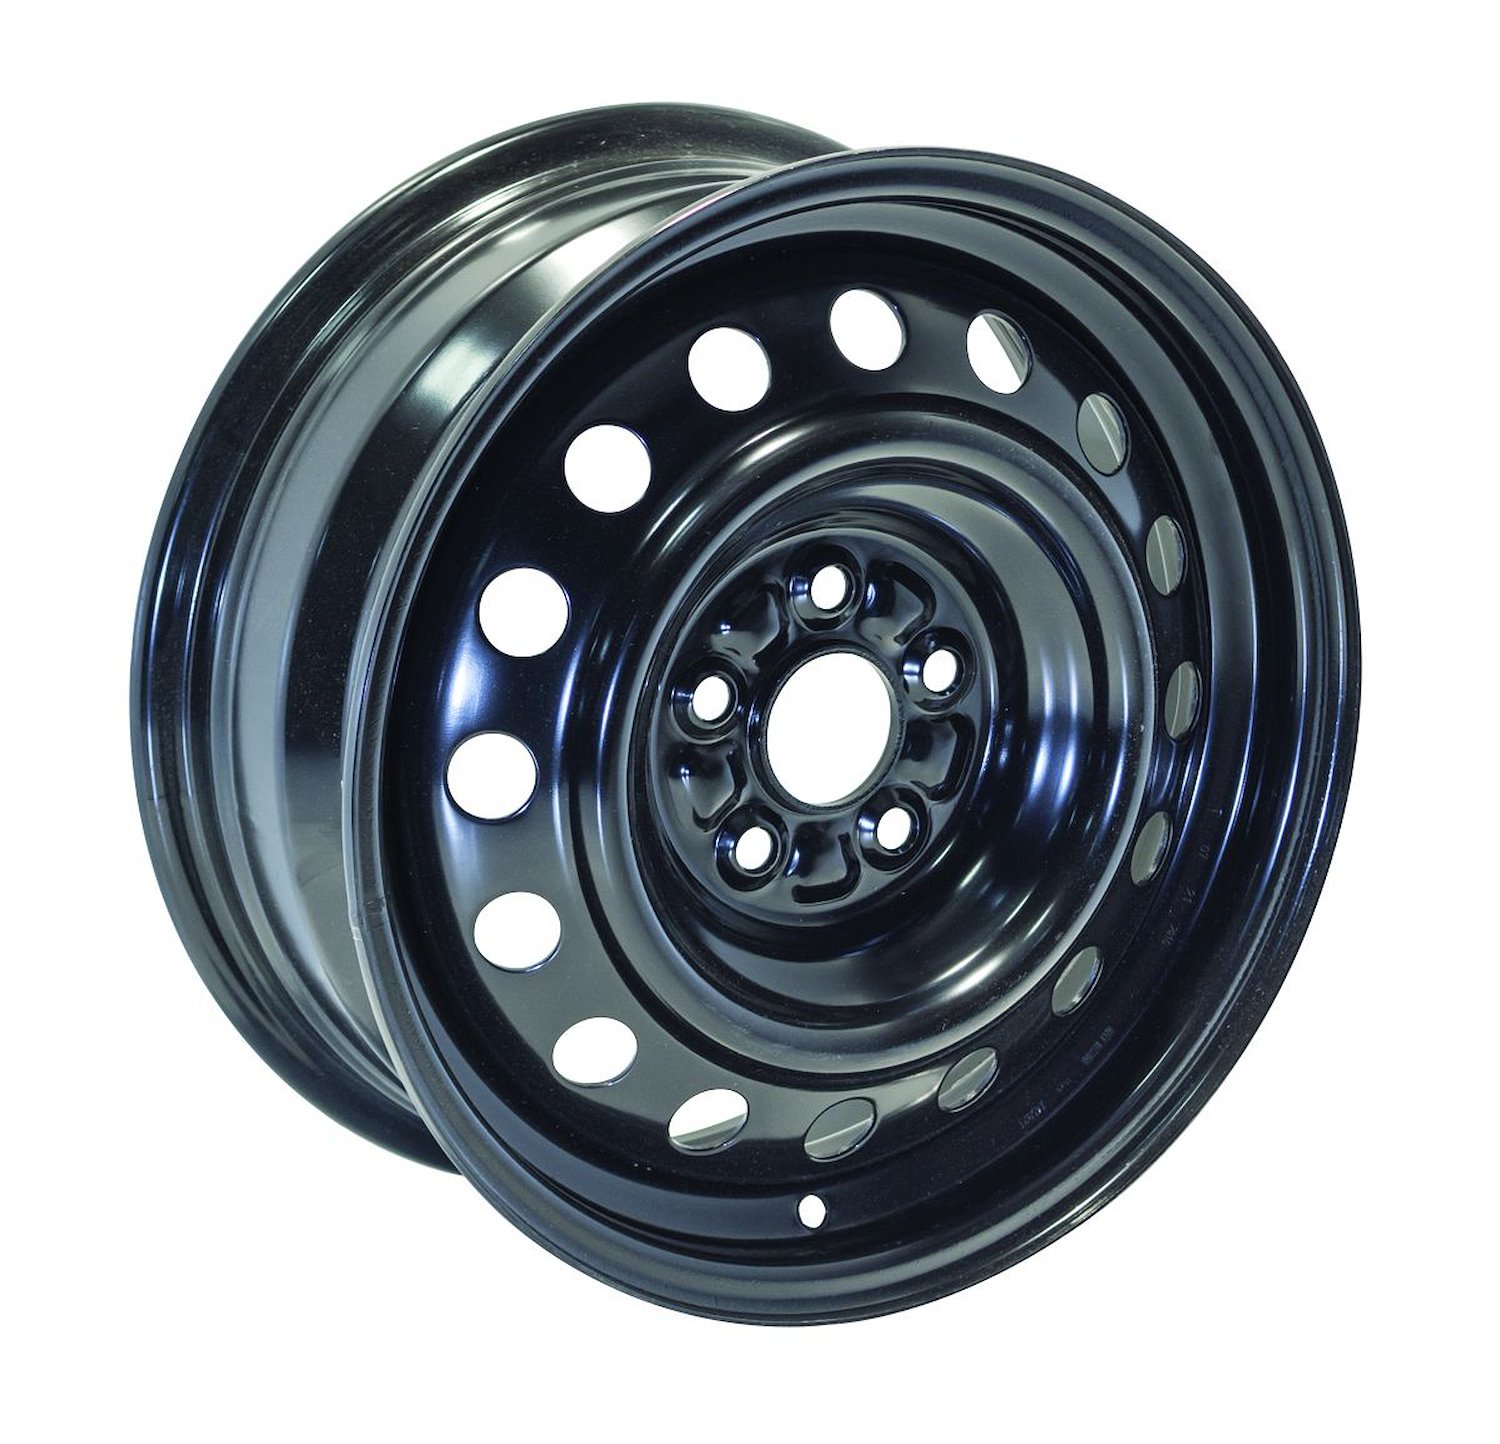 X45921 Steel Wheel [Size: 15" x 6"] Black Finish